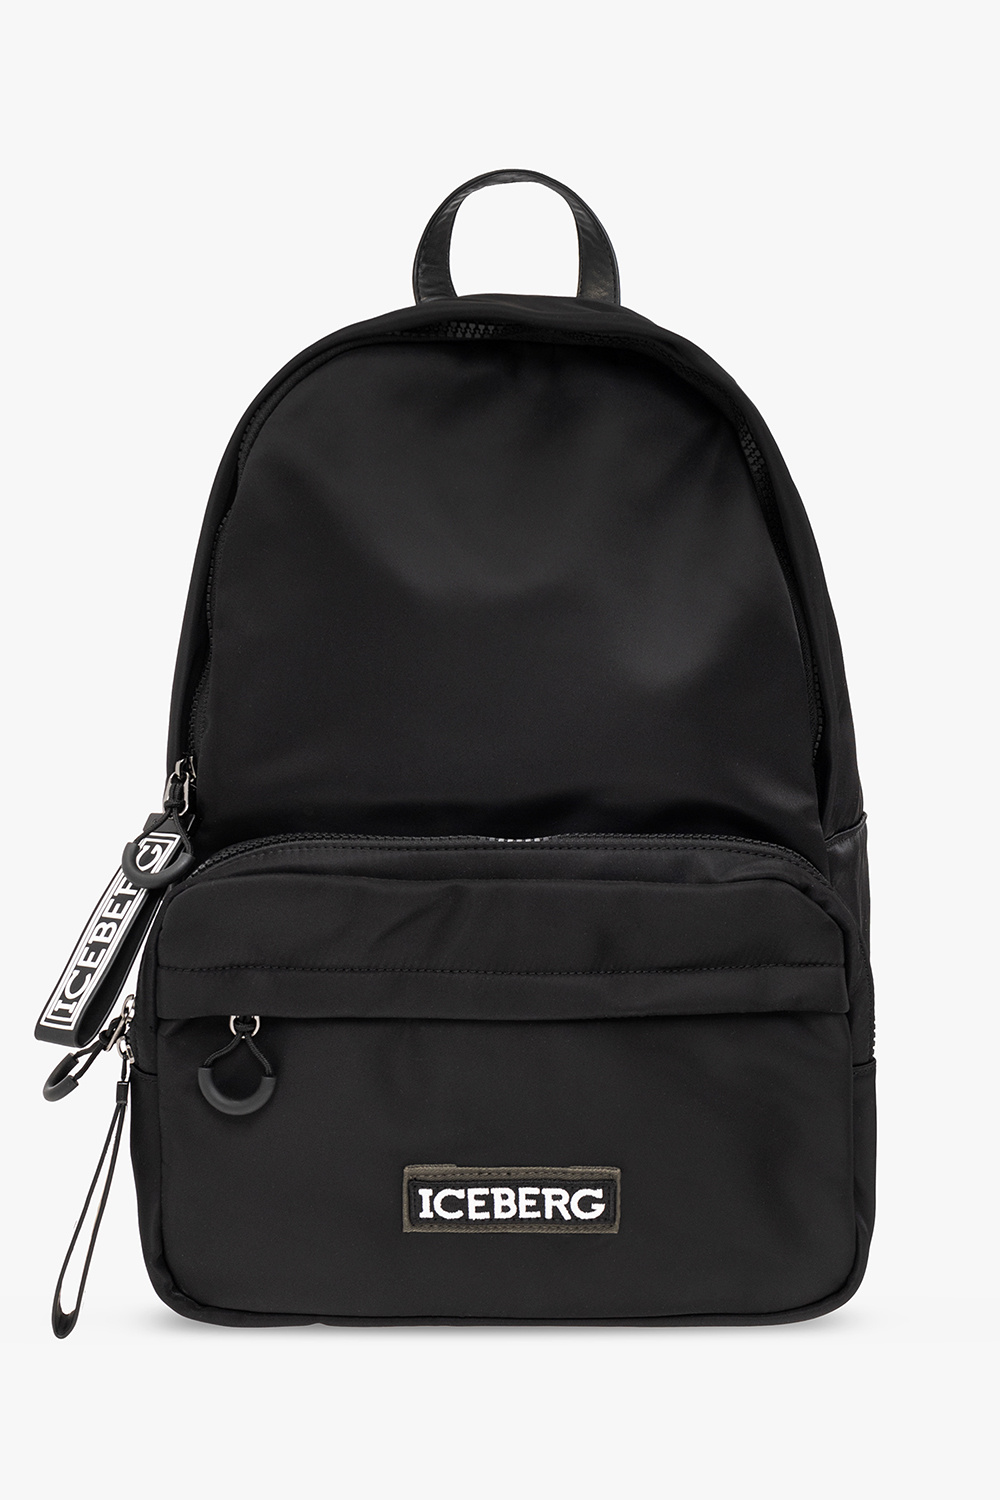 Iceberg Backpack CARPISA JEREMY SCOTT Pop BTA46805442 Black Multicolour 019